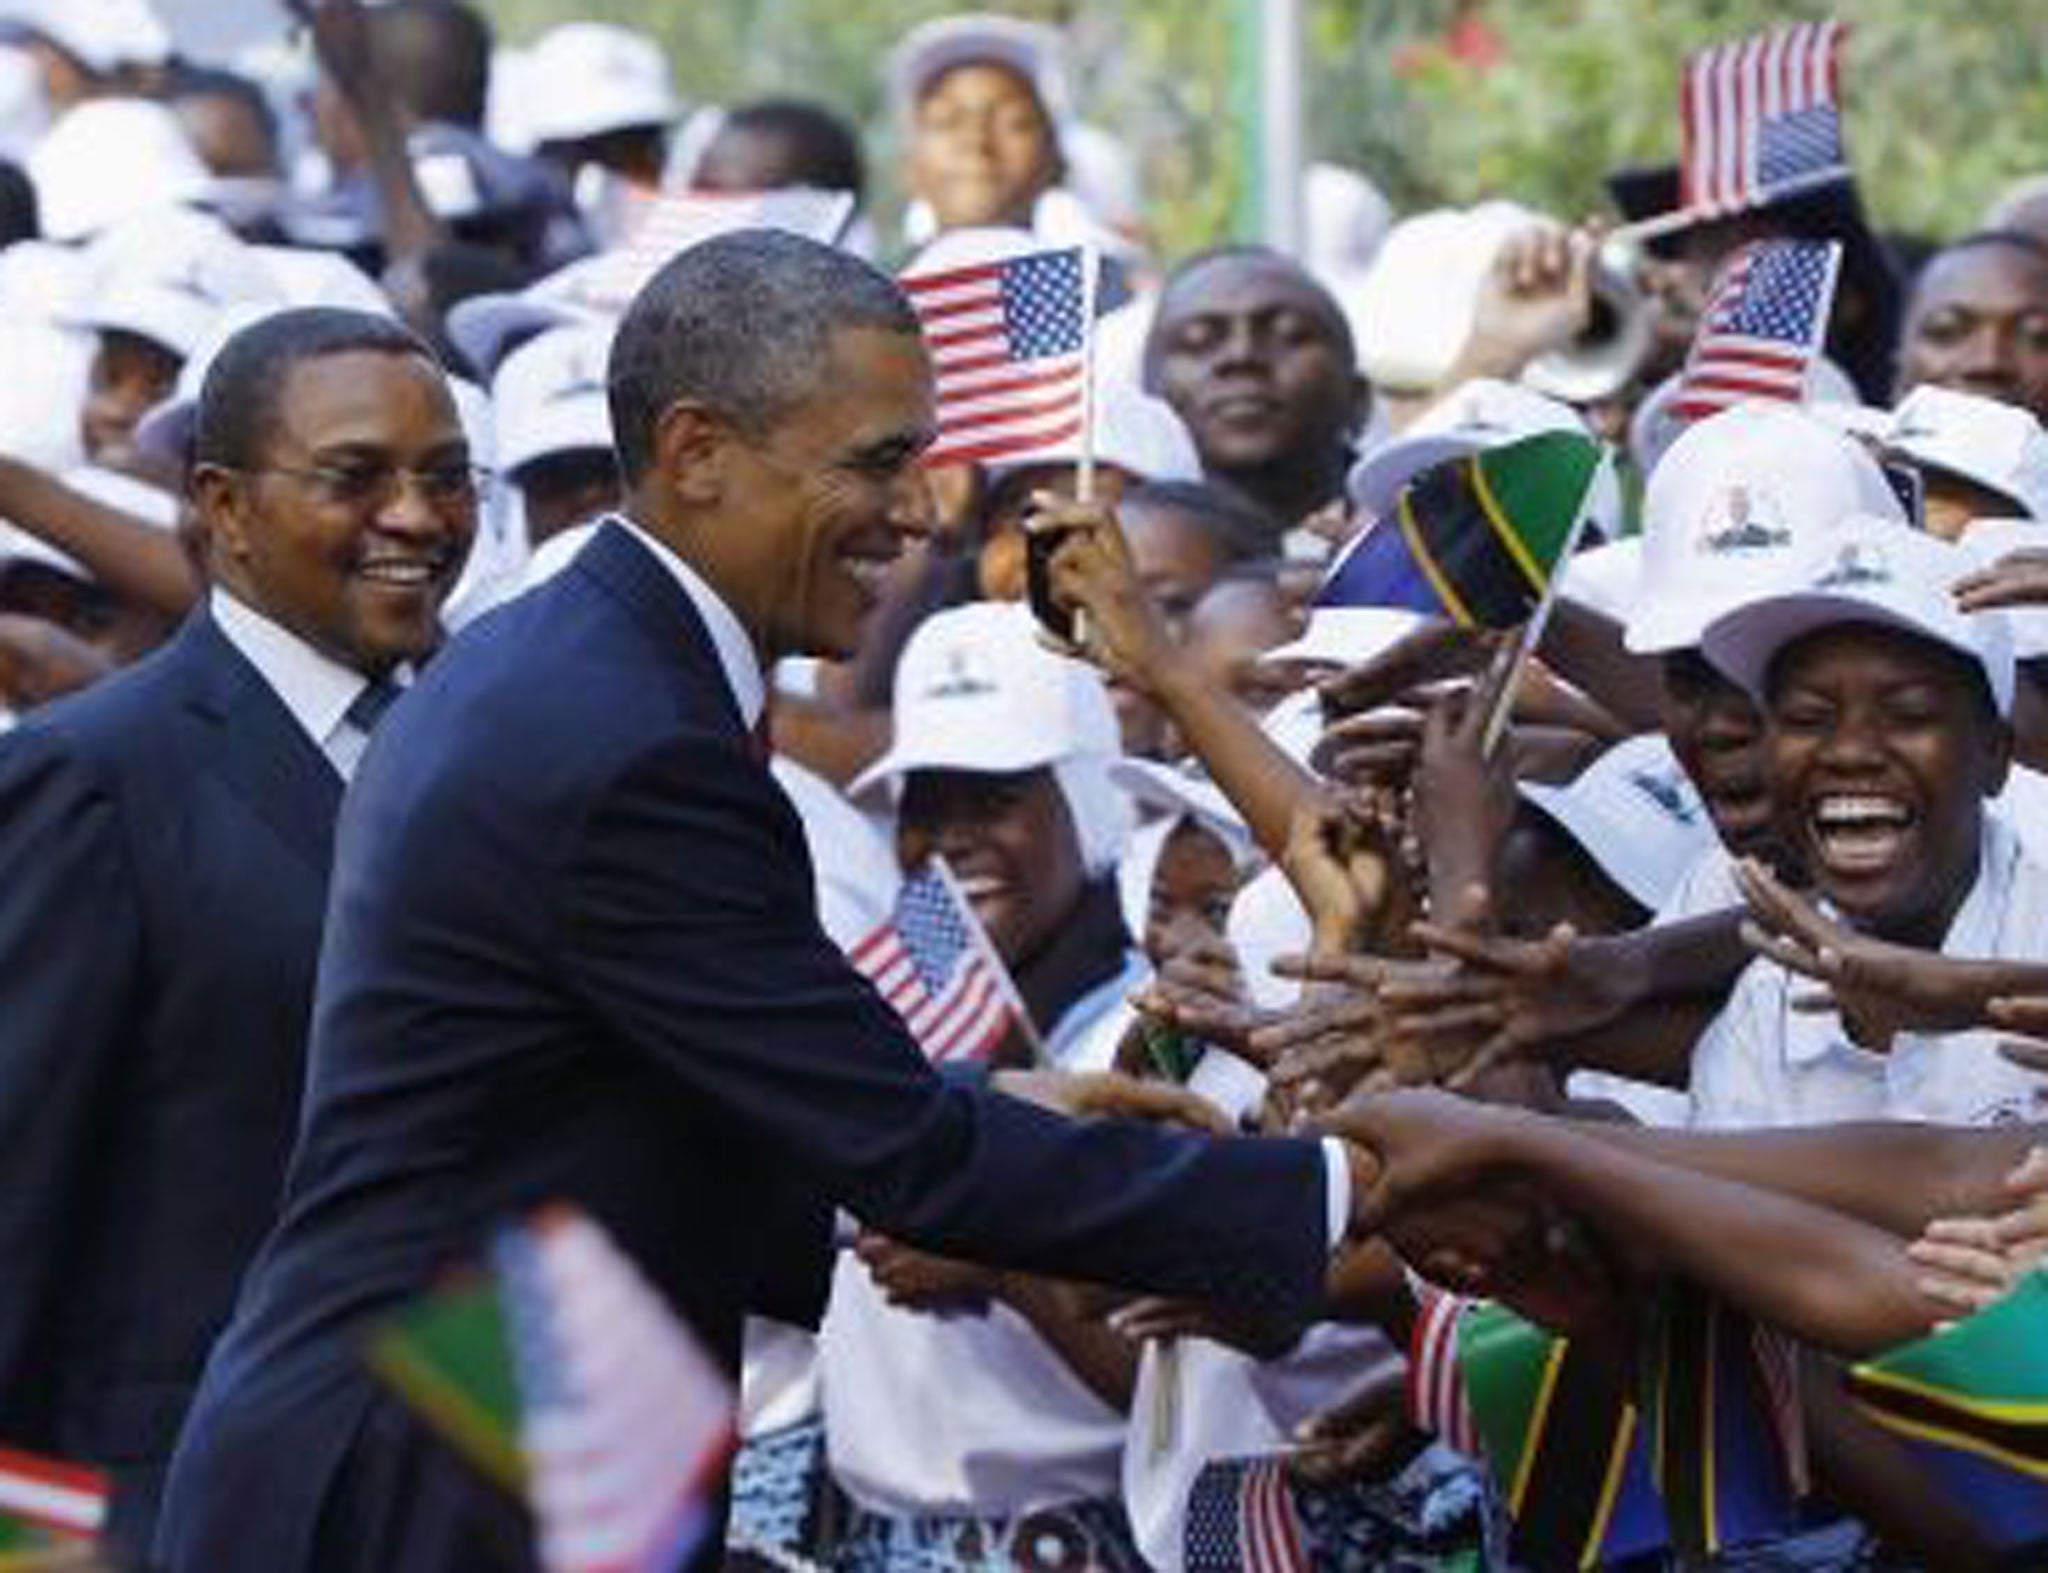 Barack Obama and Tanzania's President Jakaya Kikwete, left, at a welcoming ceremony in Dar Es Salaam